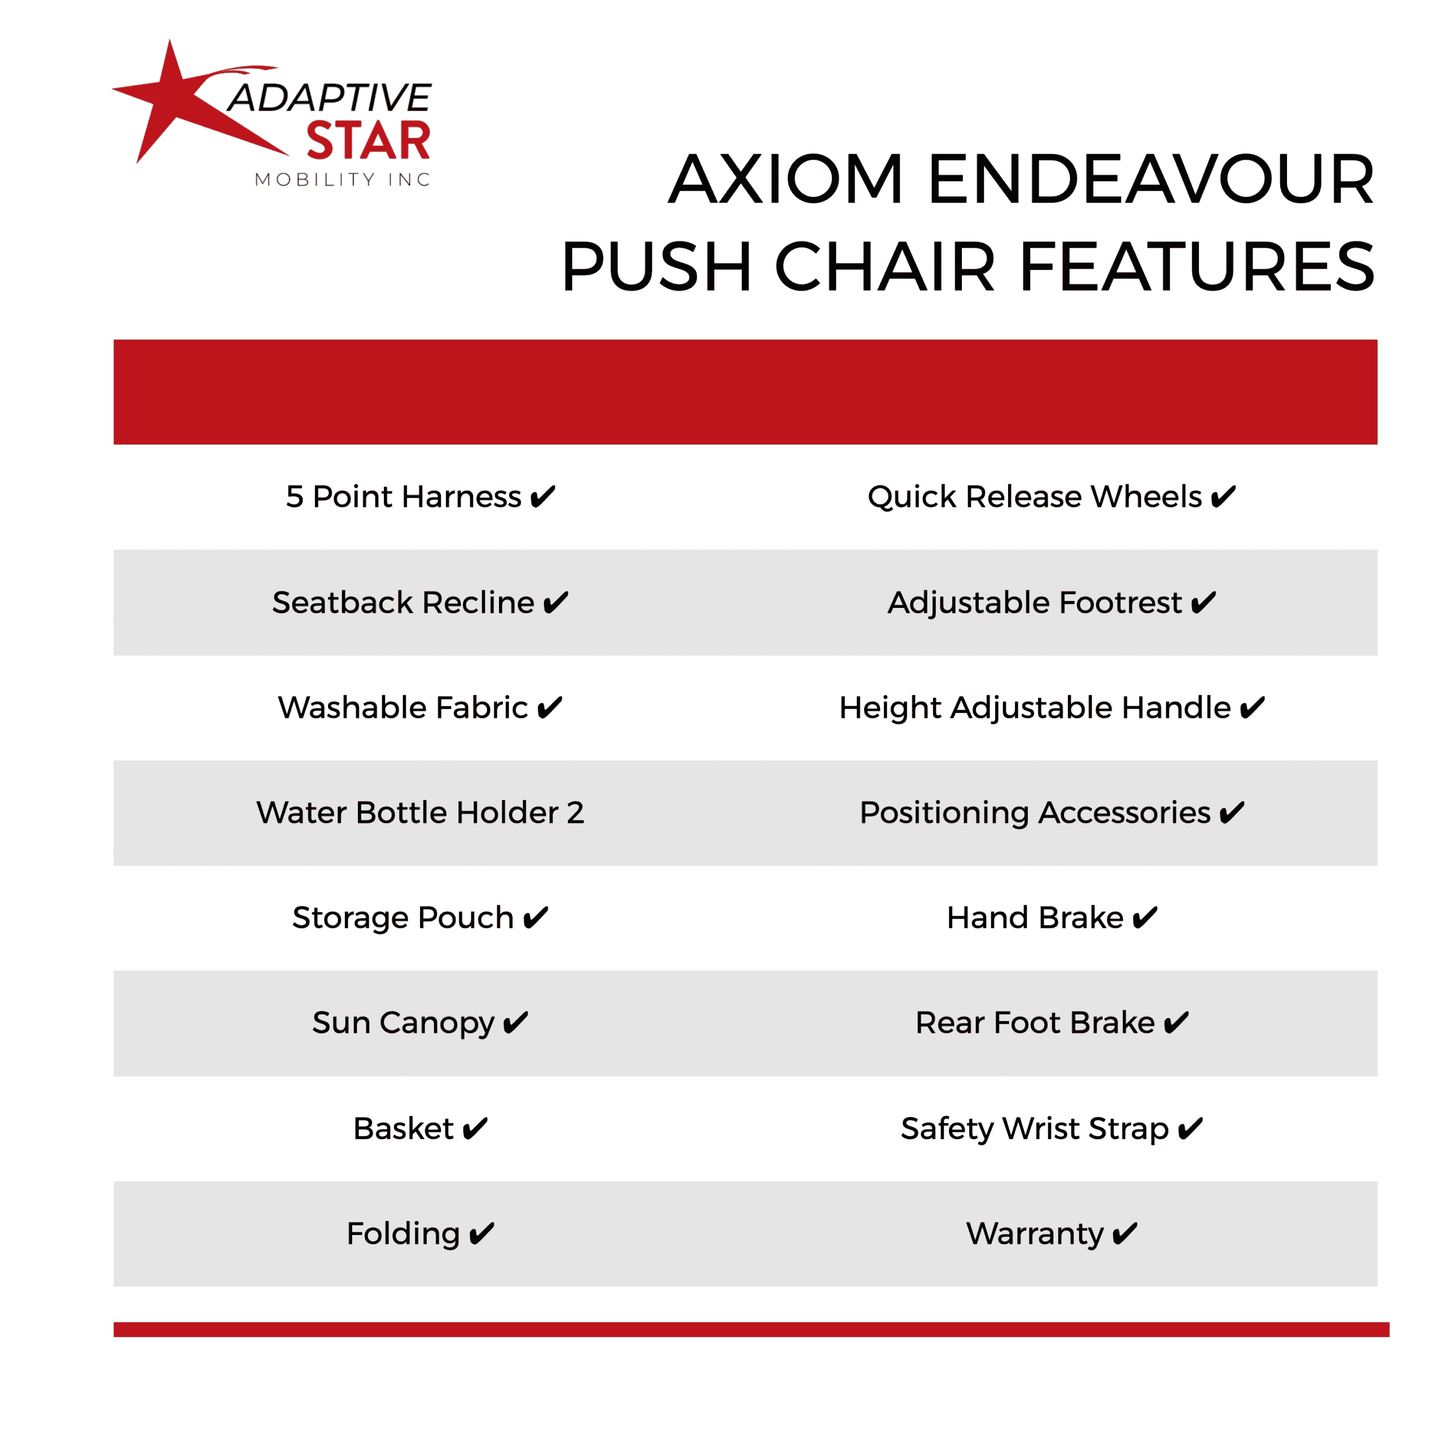 Axiom Push Chair Endeavour features